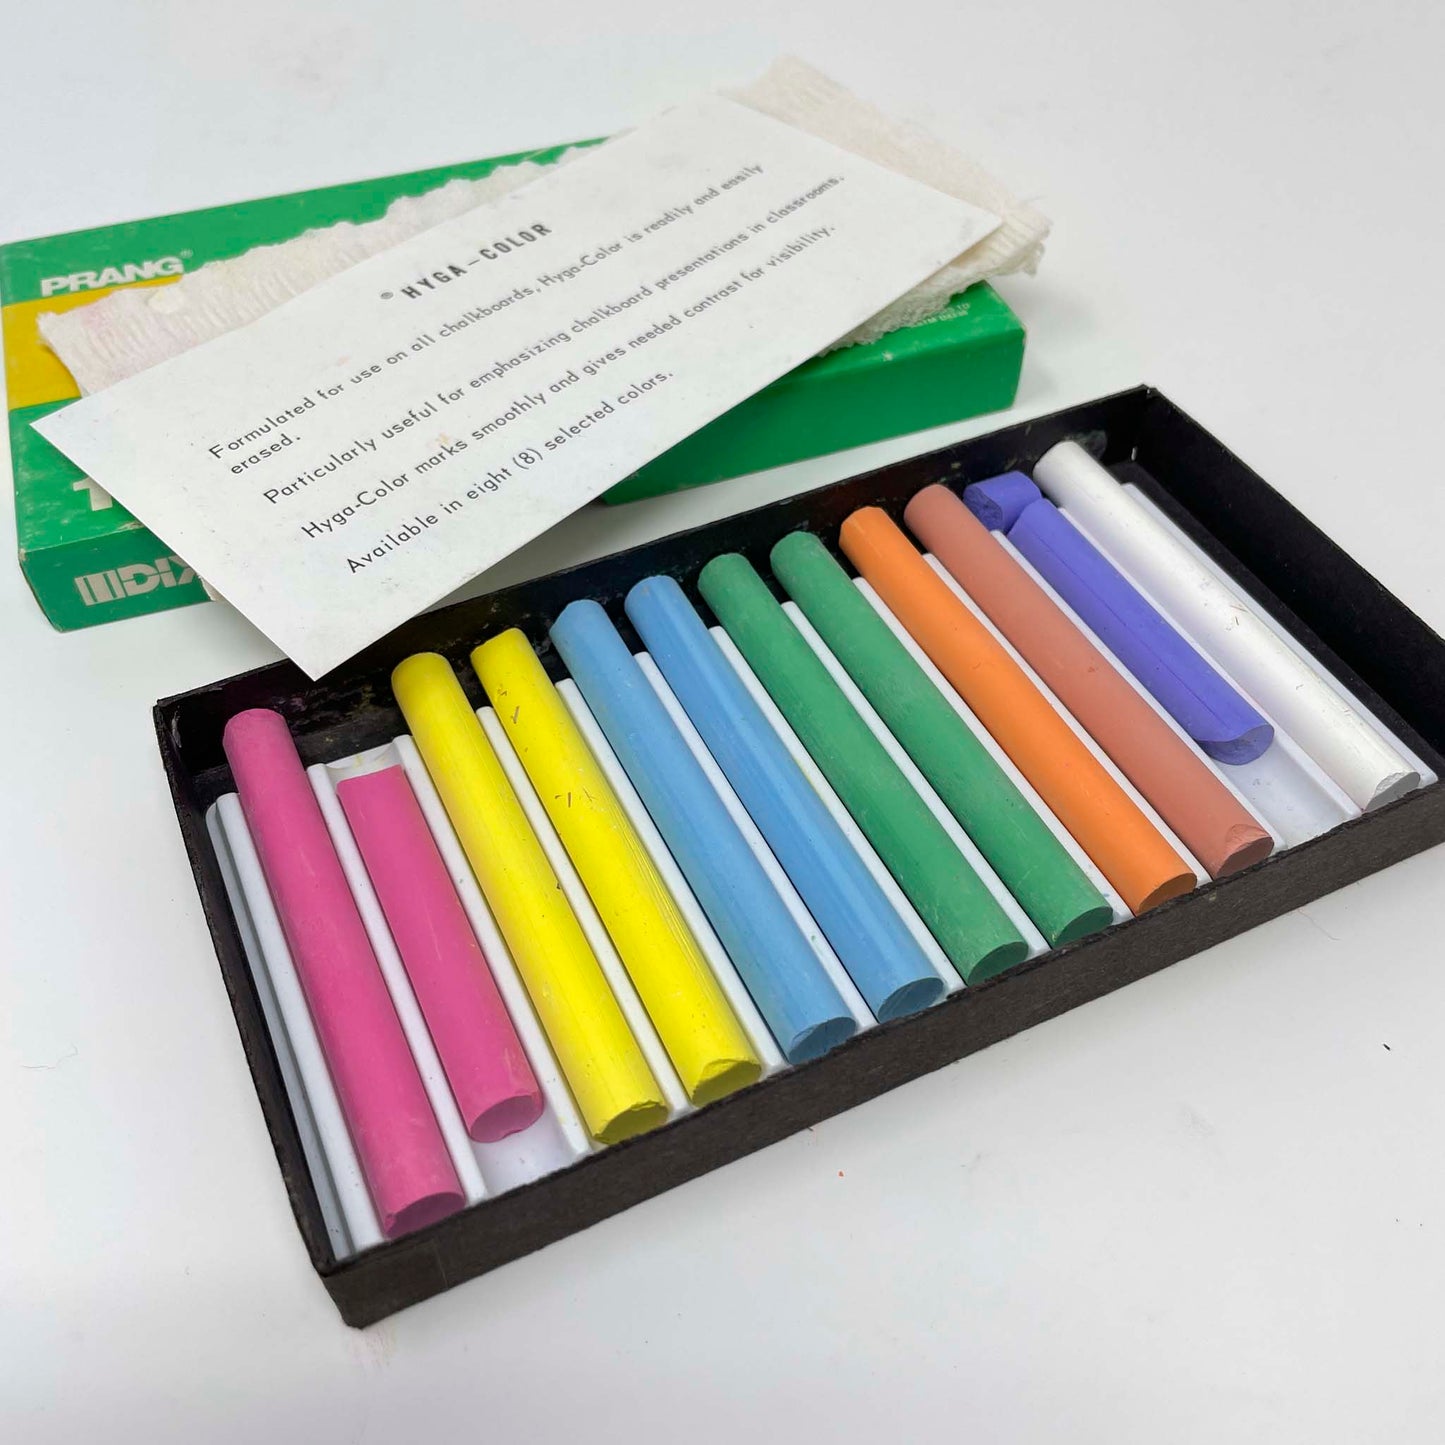 Prang Hyga-Color Colored Chalk